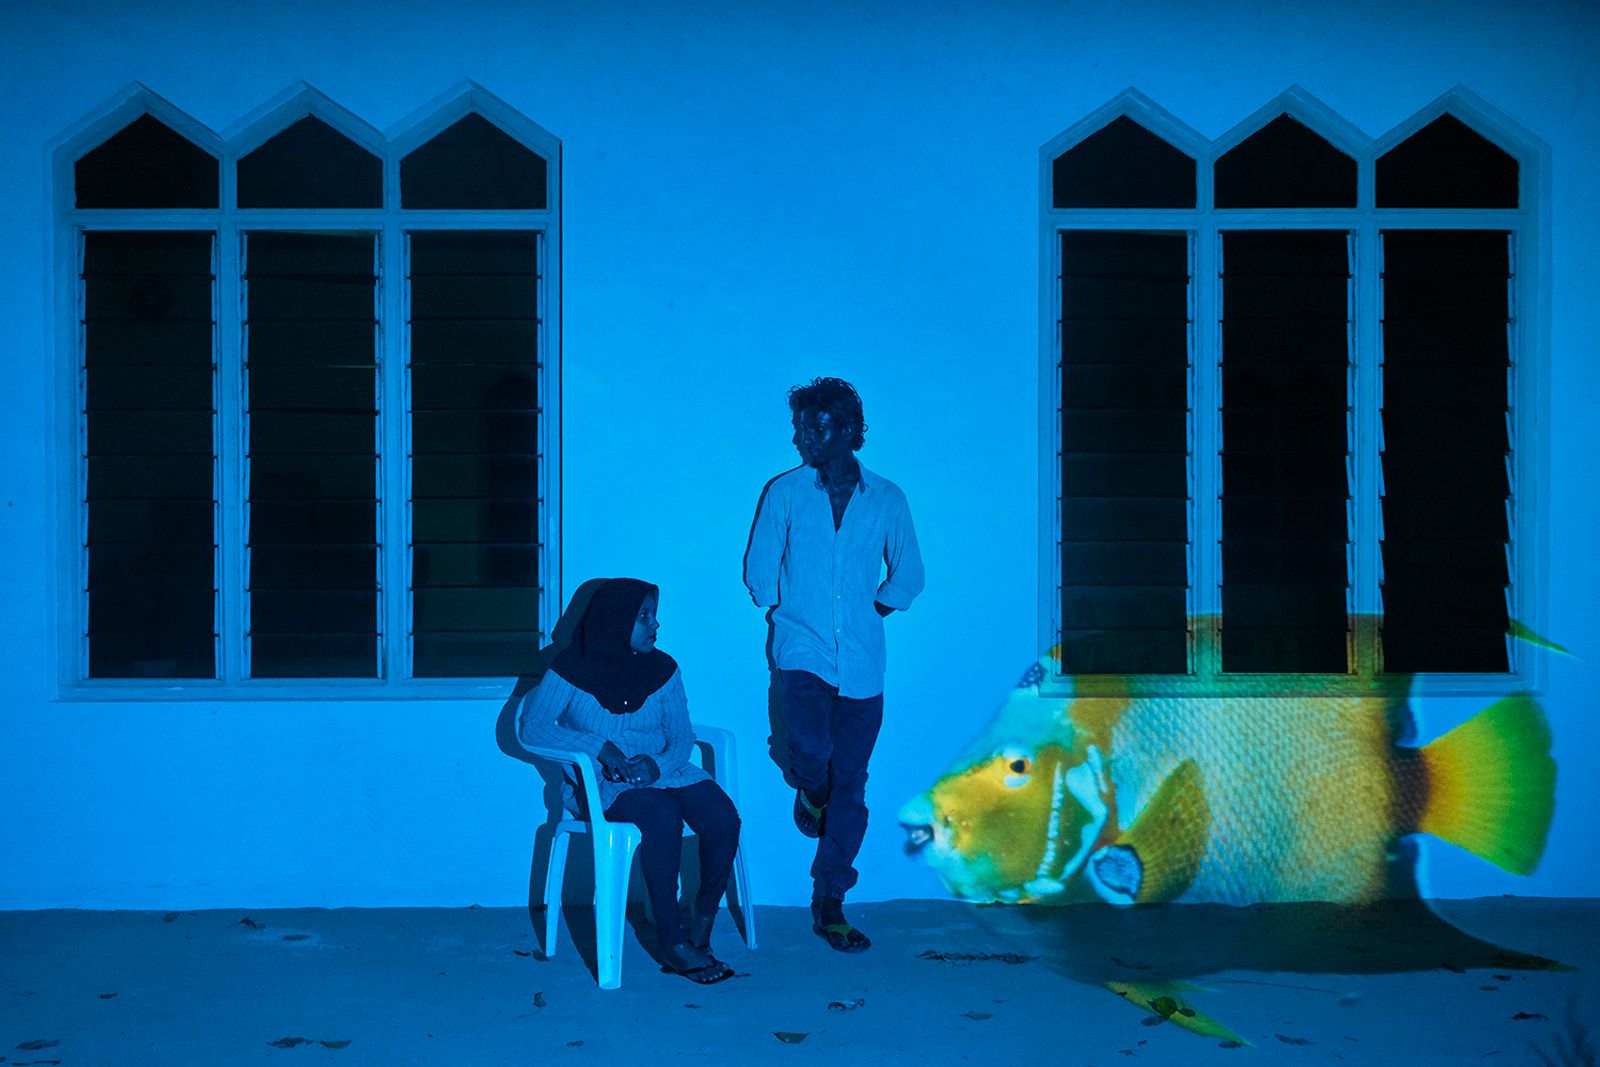 © Edoardo / Giulia Delille / Piermartiri - Image from the Diving Maldives photography project